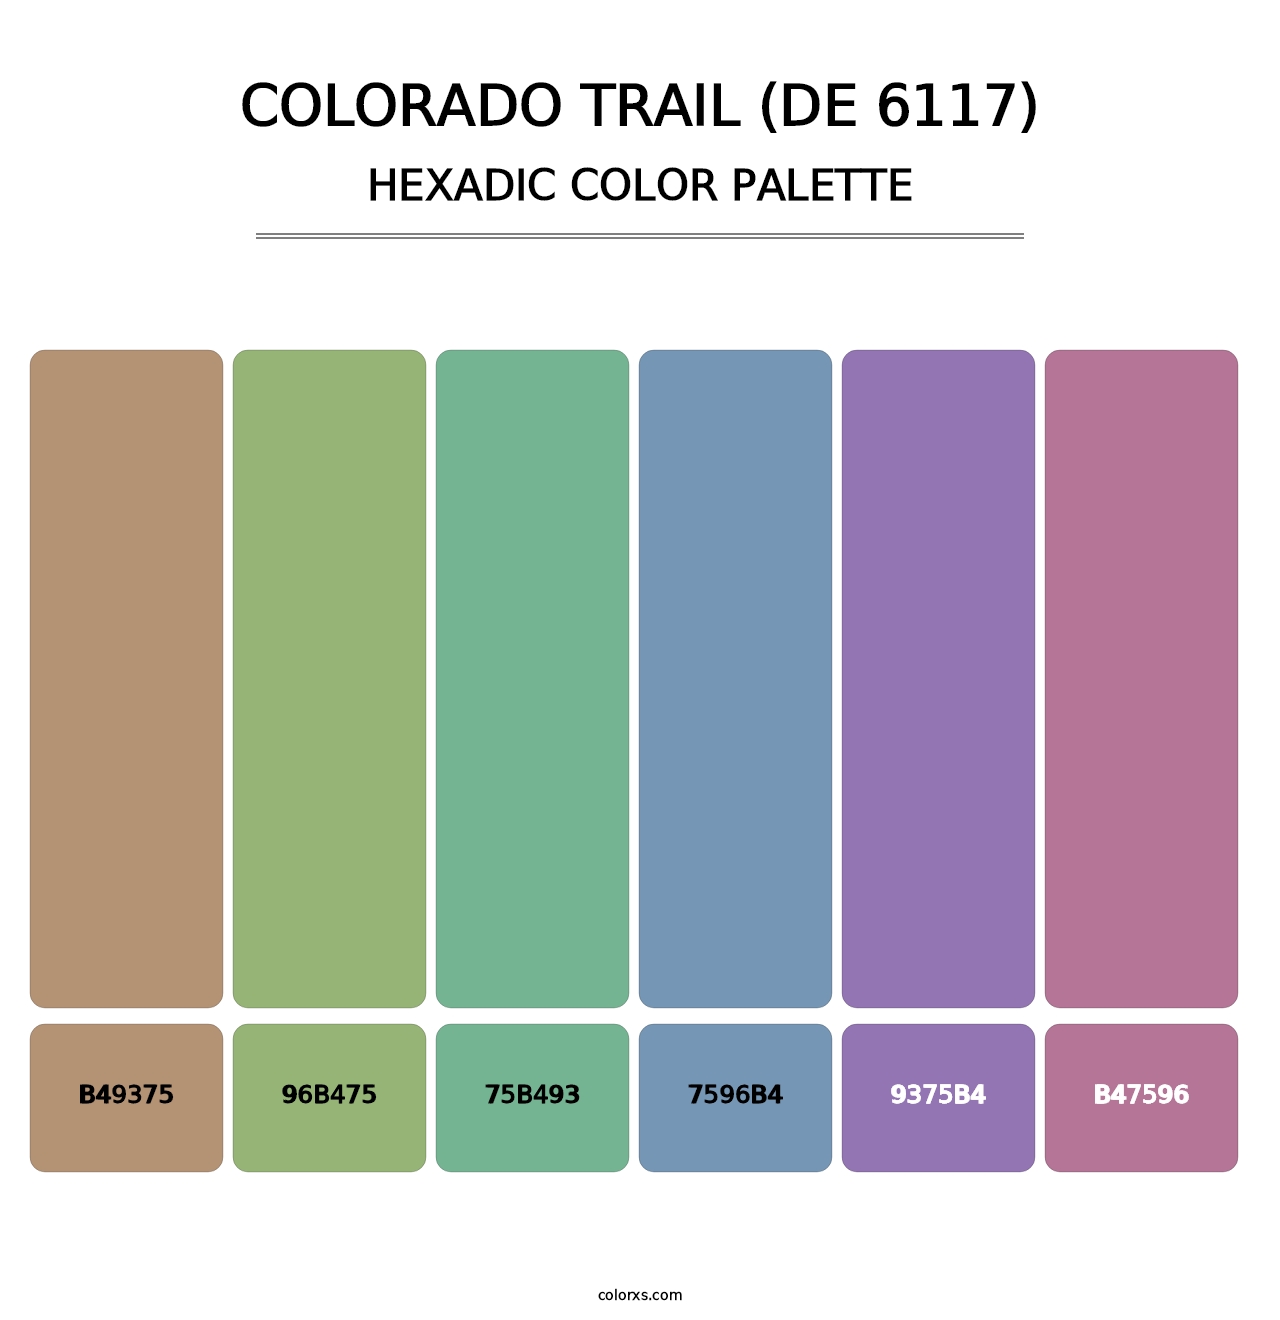 Colorado Trail (DE 6117) - Hexadic Color Palette